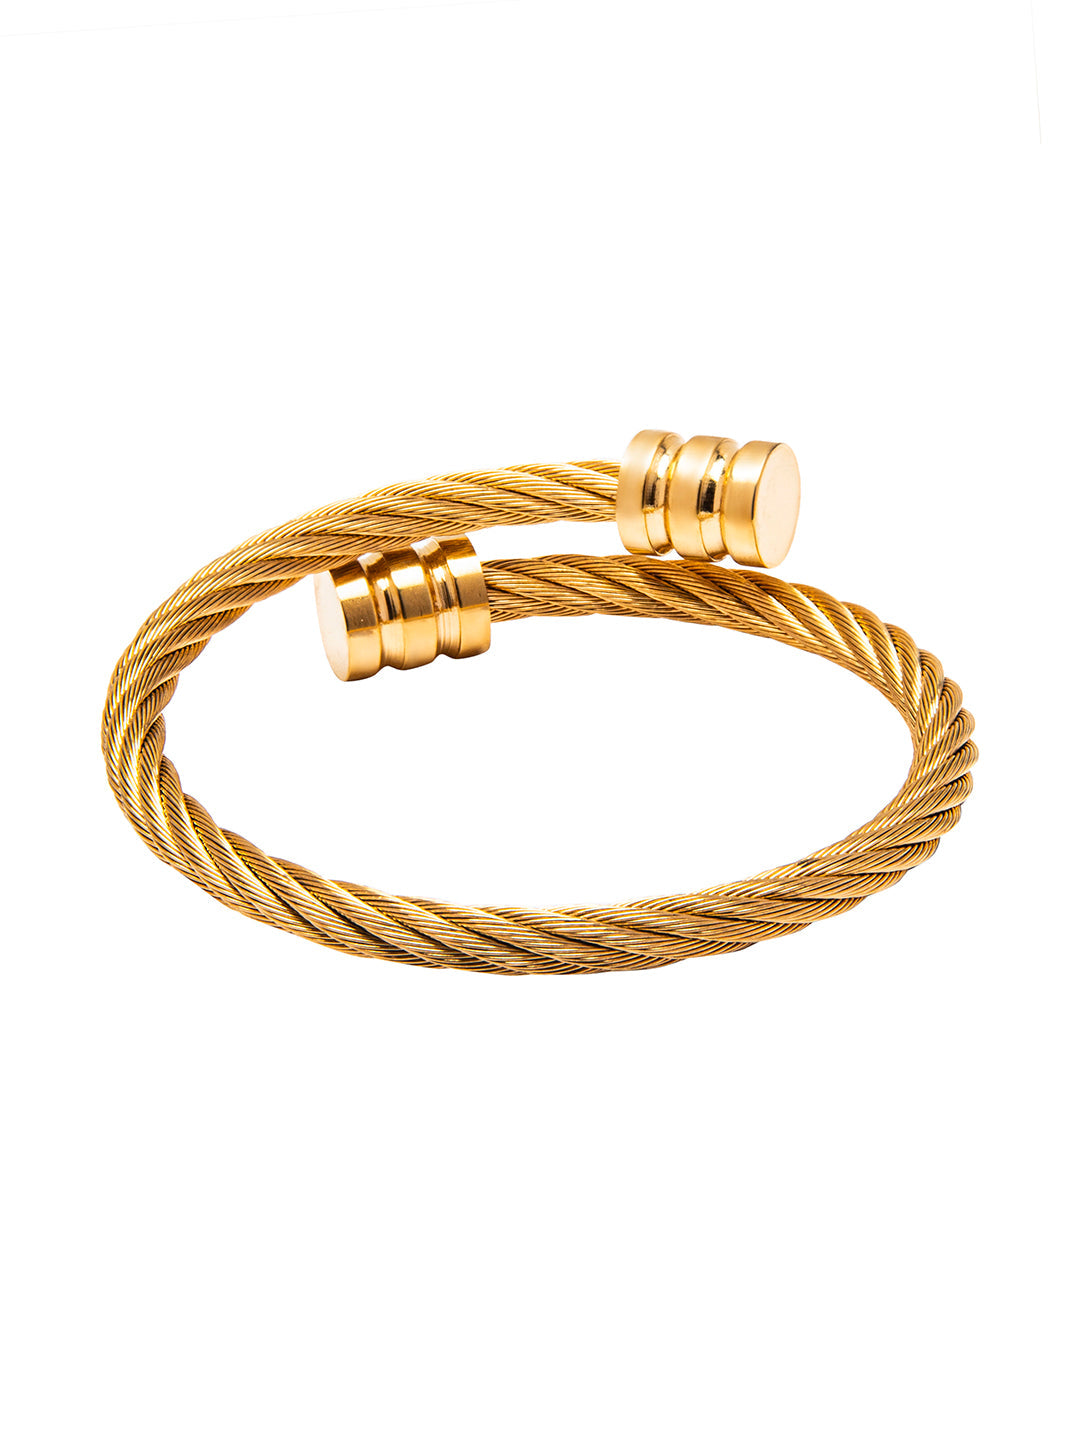 Mens bracelet gold jewelry, Mens gold bracelets, Mens gold jewelry